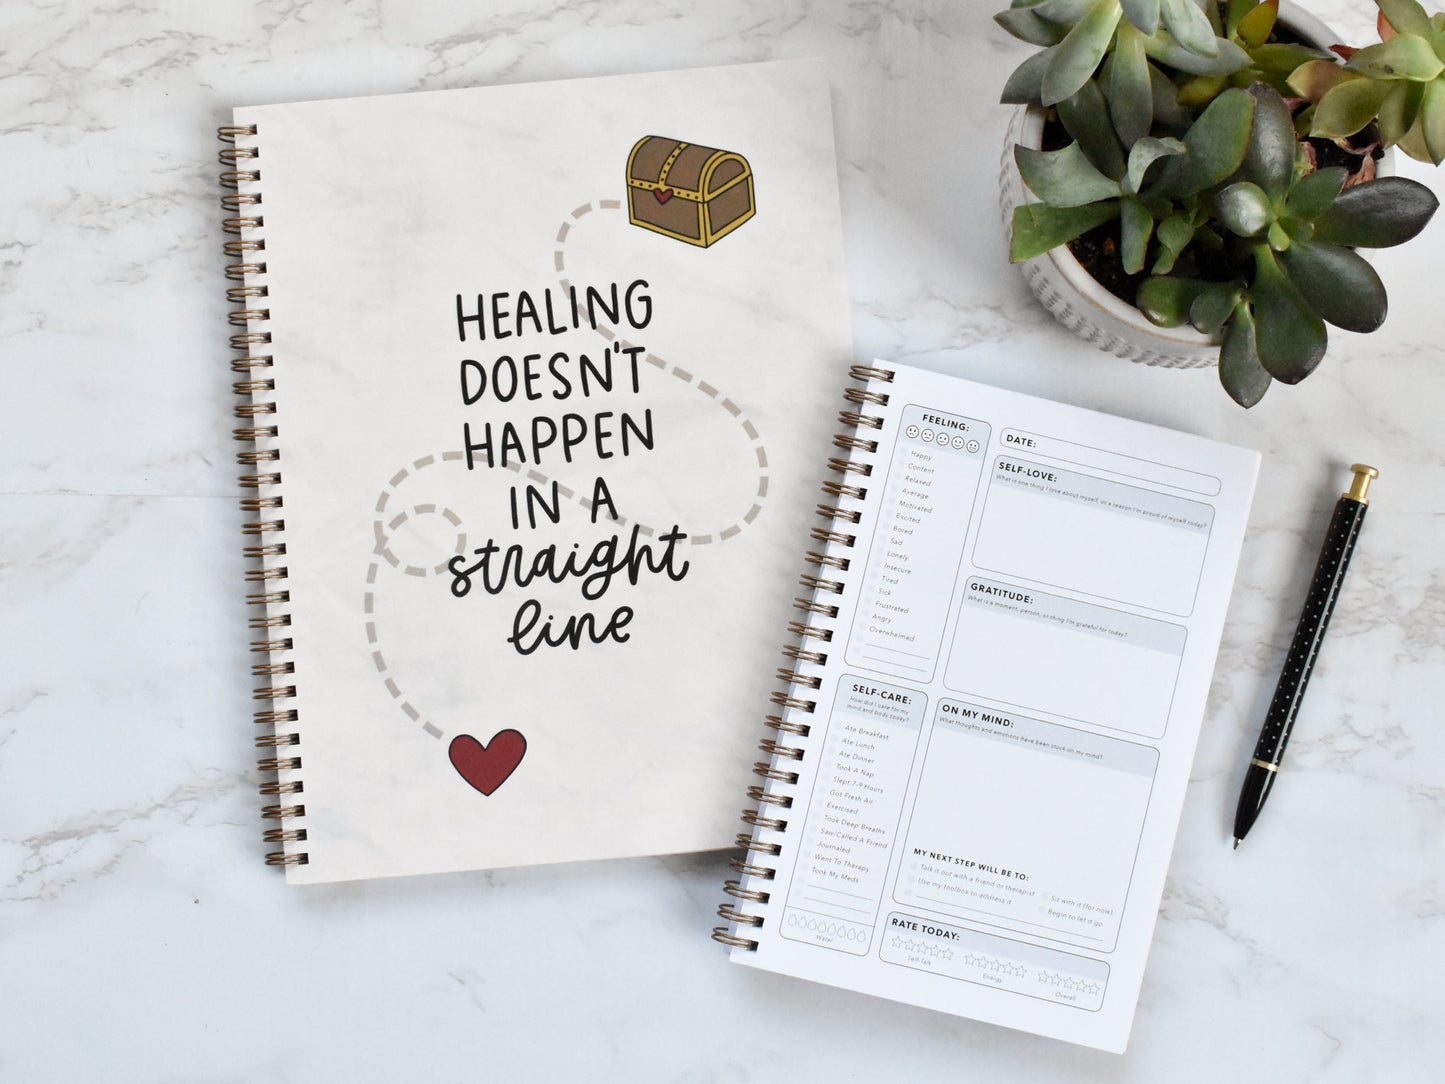 Healing / Straight Line Mental Health Journal